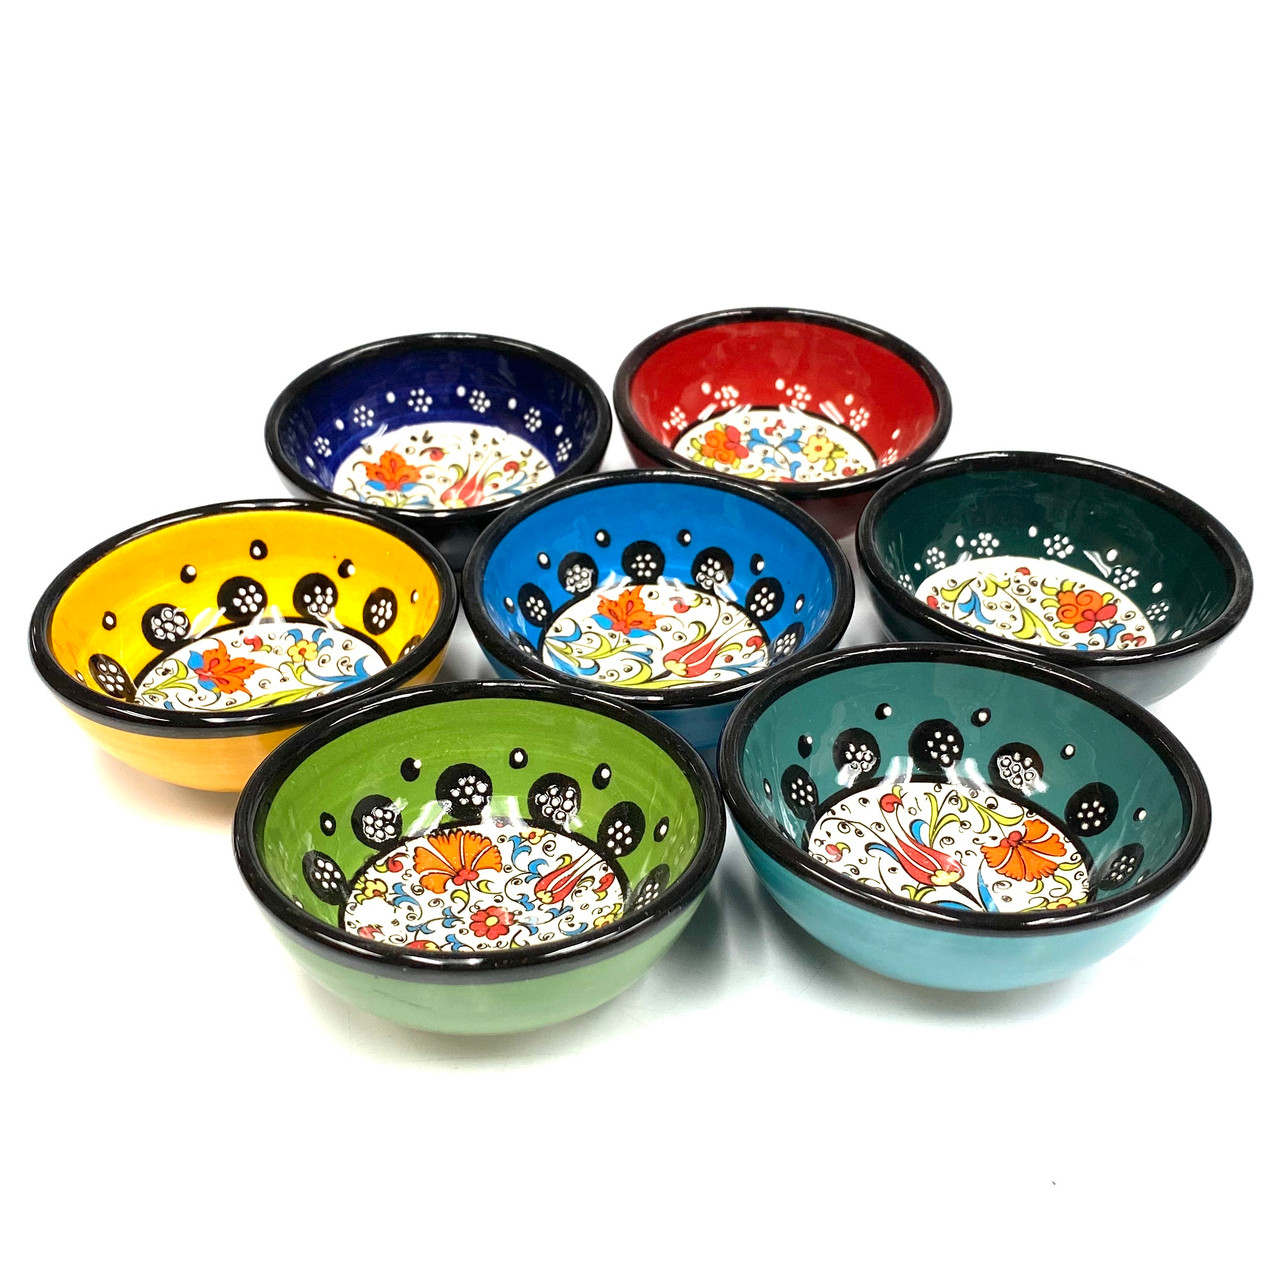 https://cdn11.bigcommerce.com/s-271b7/images/stencil/1280x1280/products/19581/75001/n10005-nimet-classical-turkish-porcelain-bowl-75cm-n10005__61756.1614638754.jpg?c=2